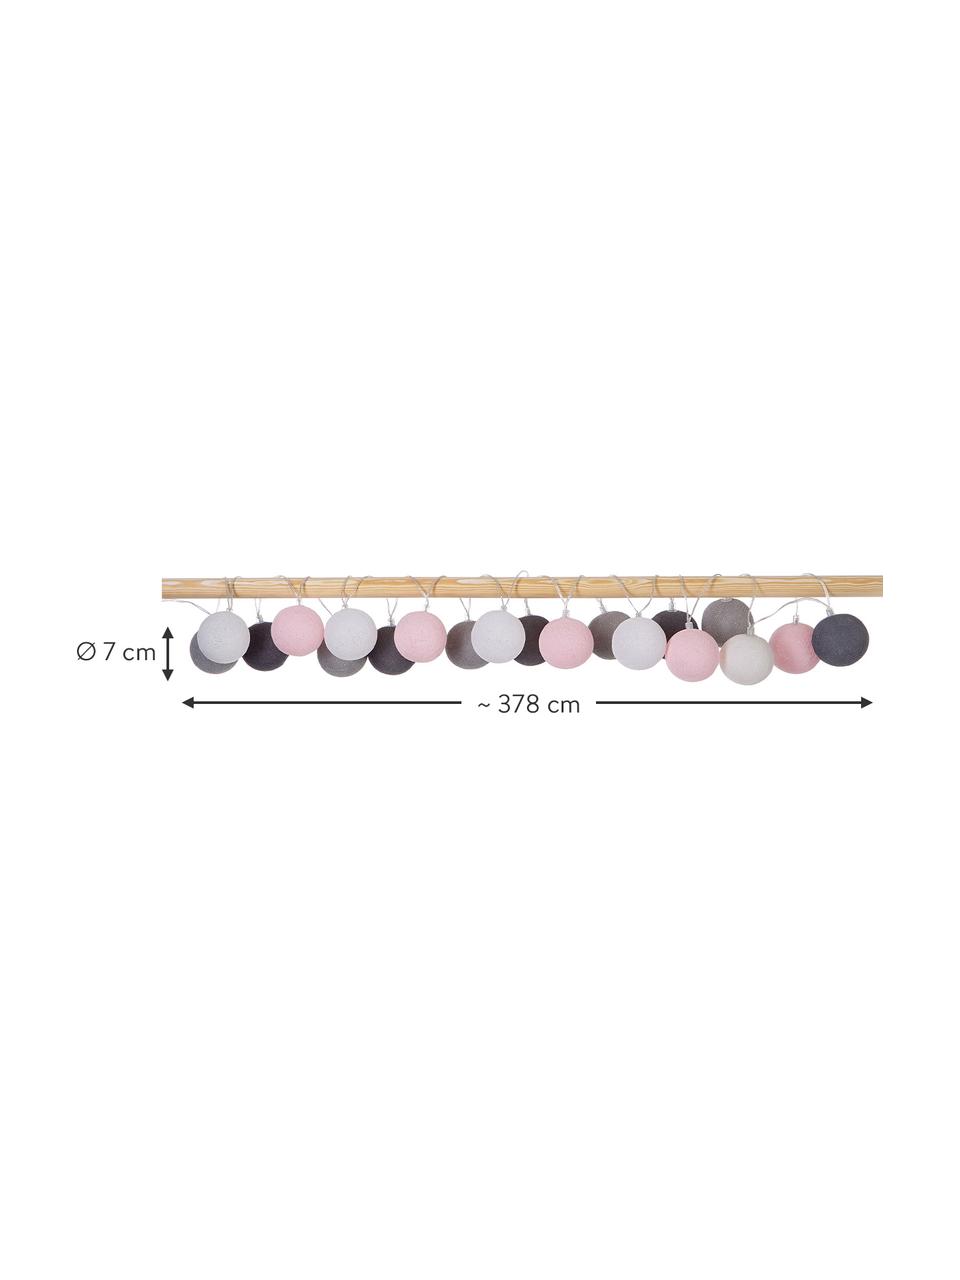 Guirlande lumineuse LED Colorain, 378 cm,, Blanc, rose, tons gris, long. 378 cm